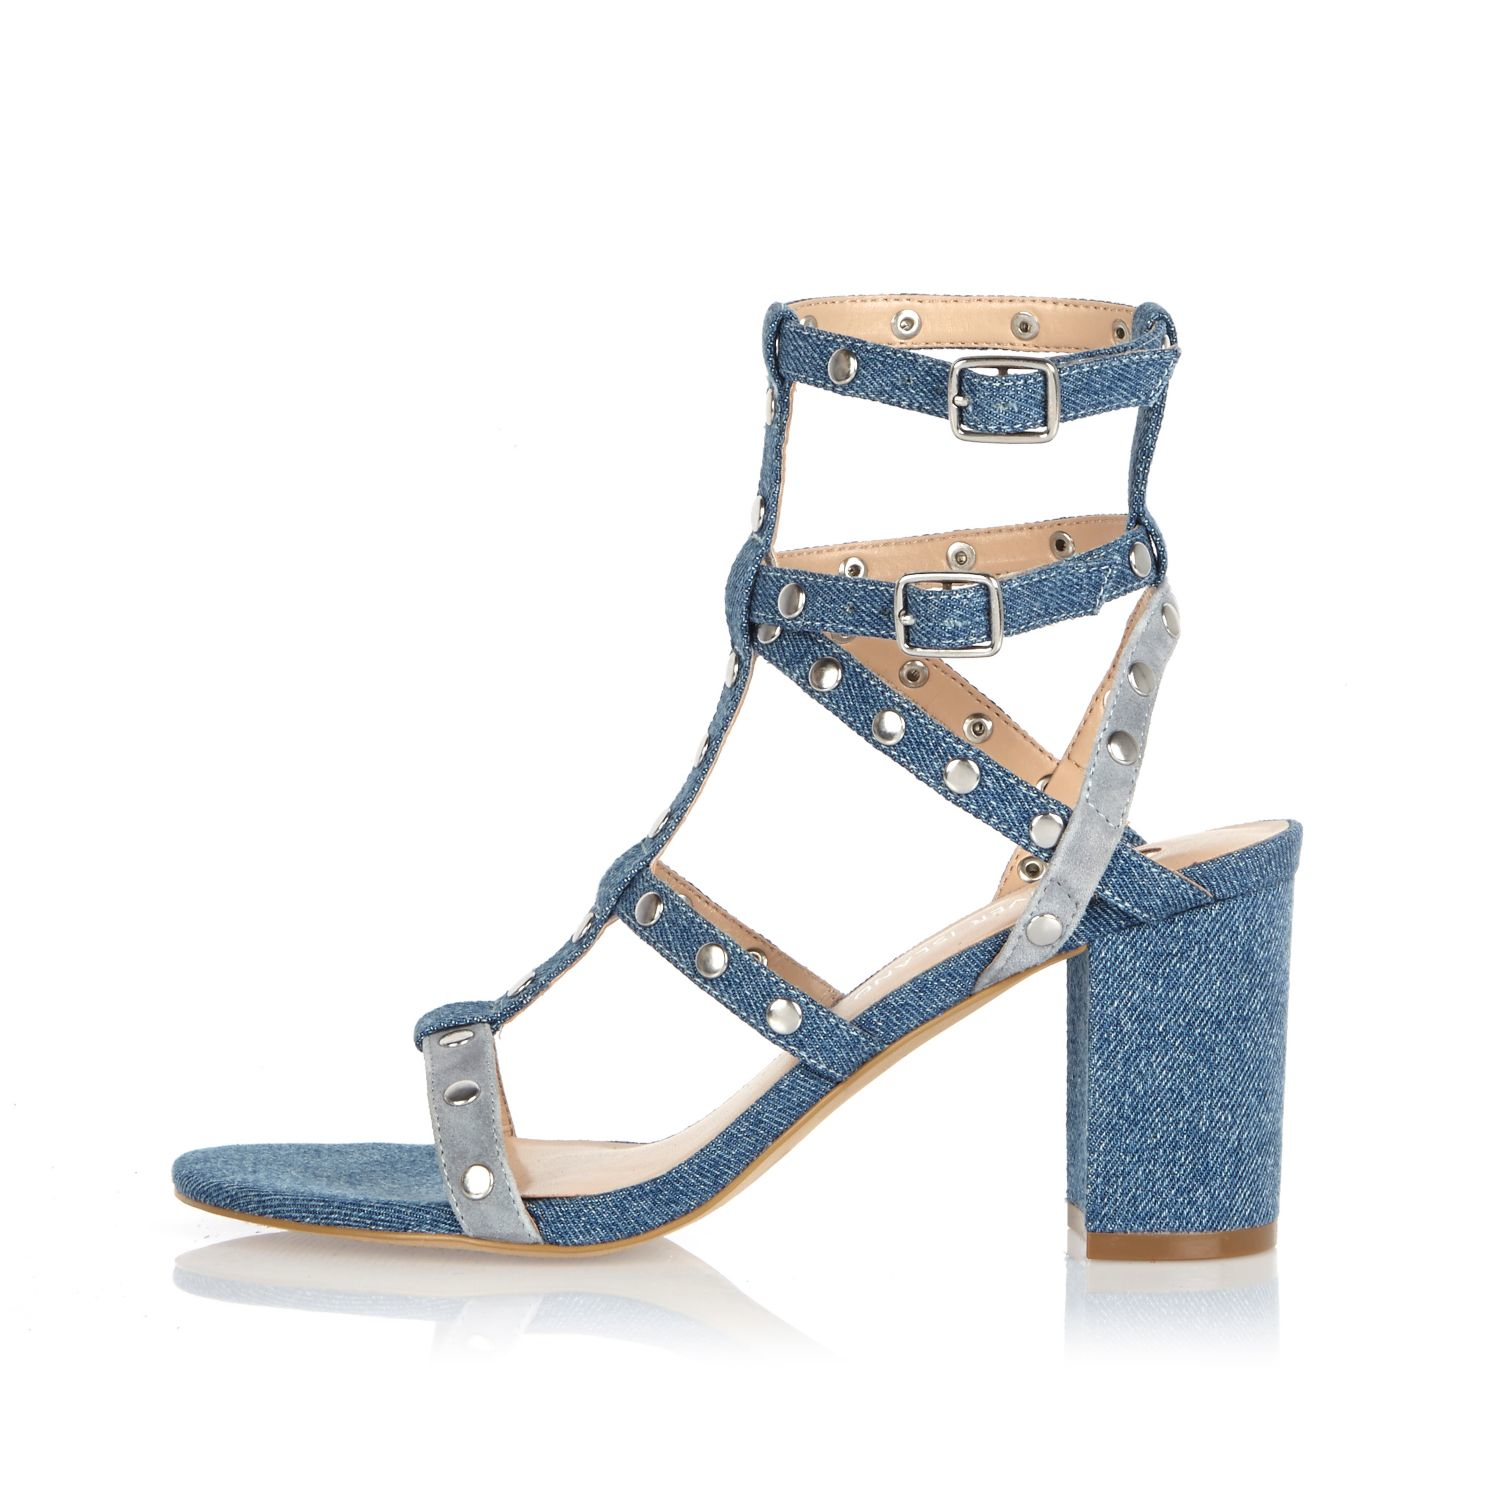 Shoes High-Heeled Sandals Strapped High-Heeled Sandals River Island Strapped High-Heeled Sandals blue elegant 